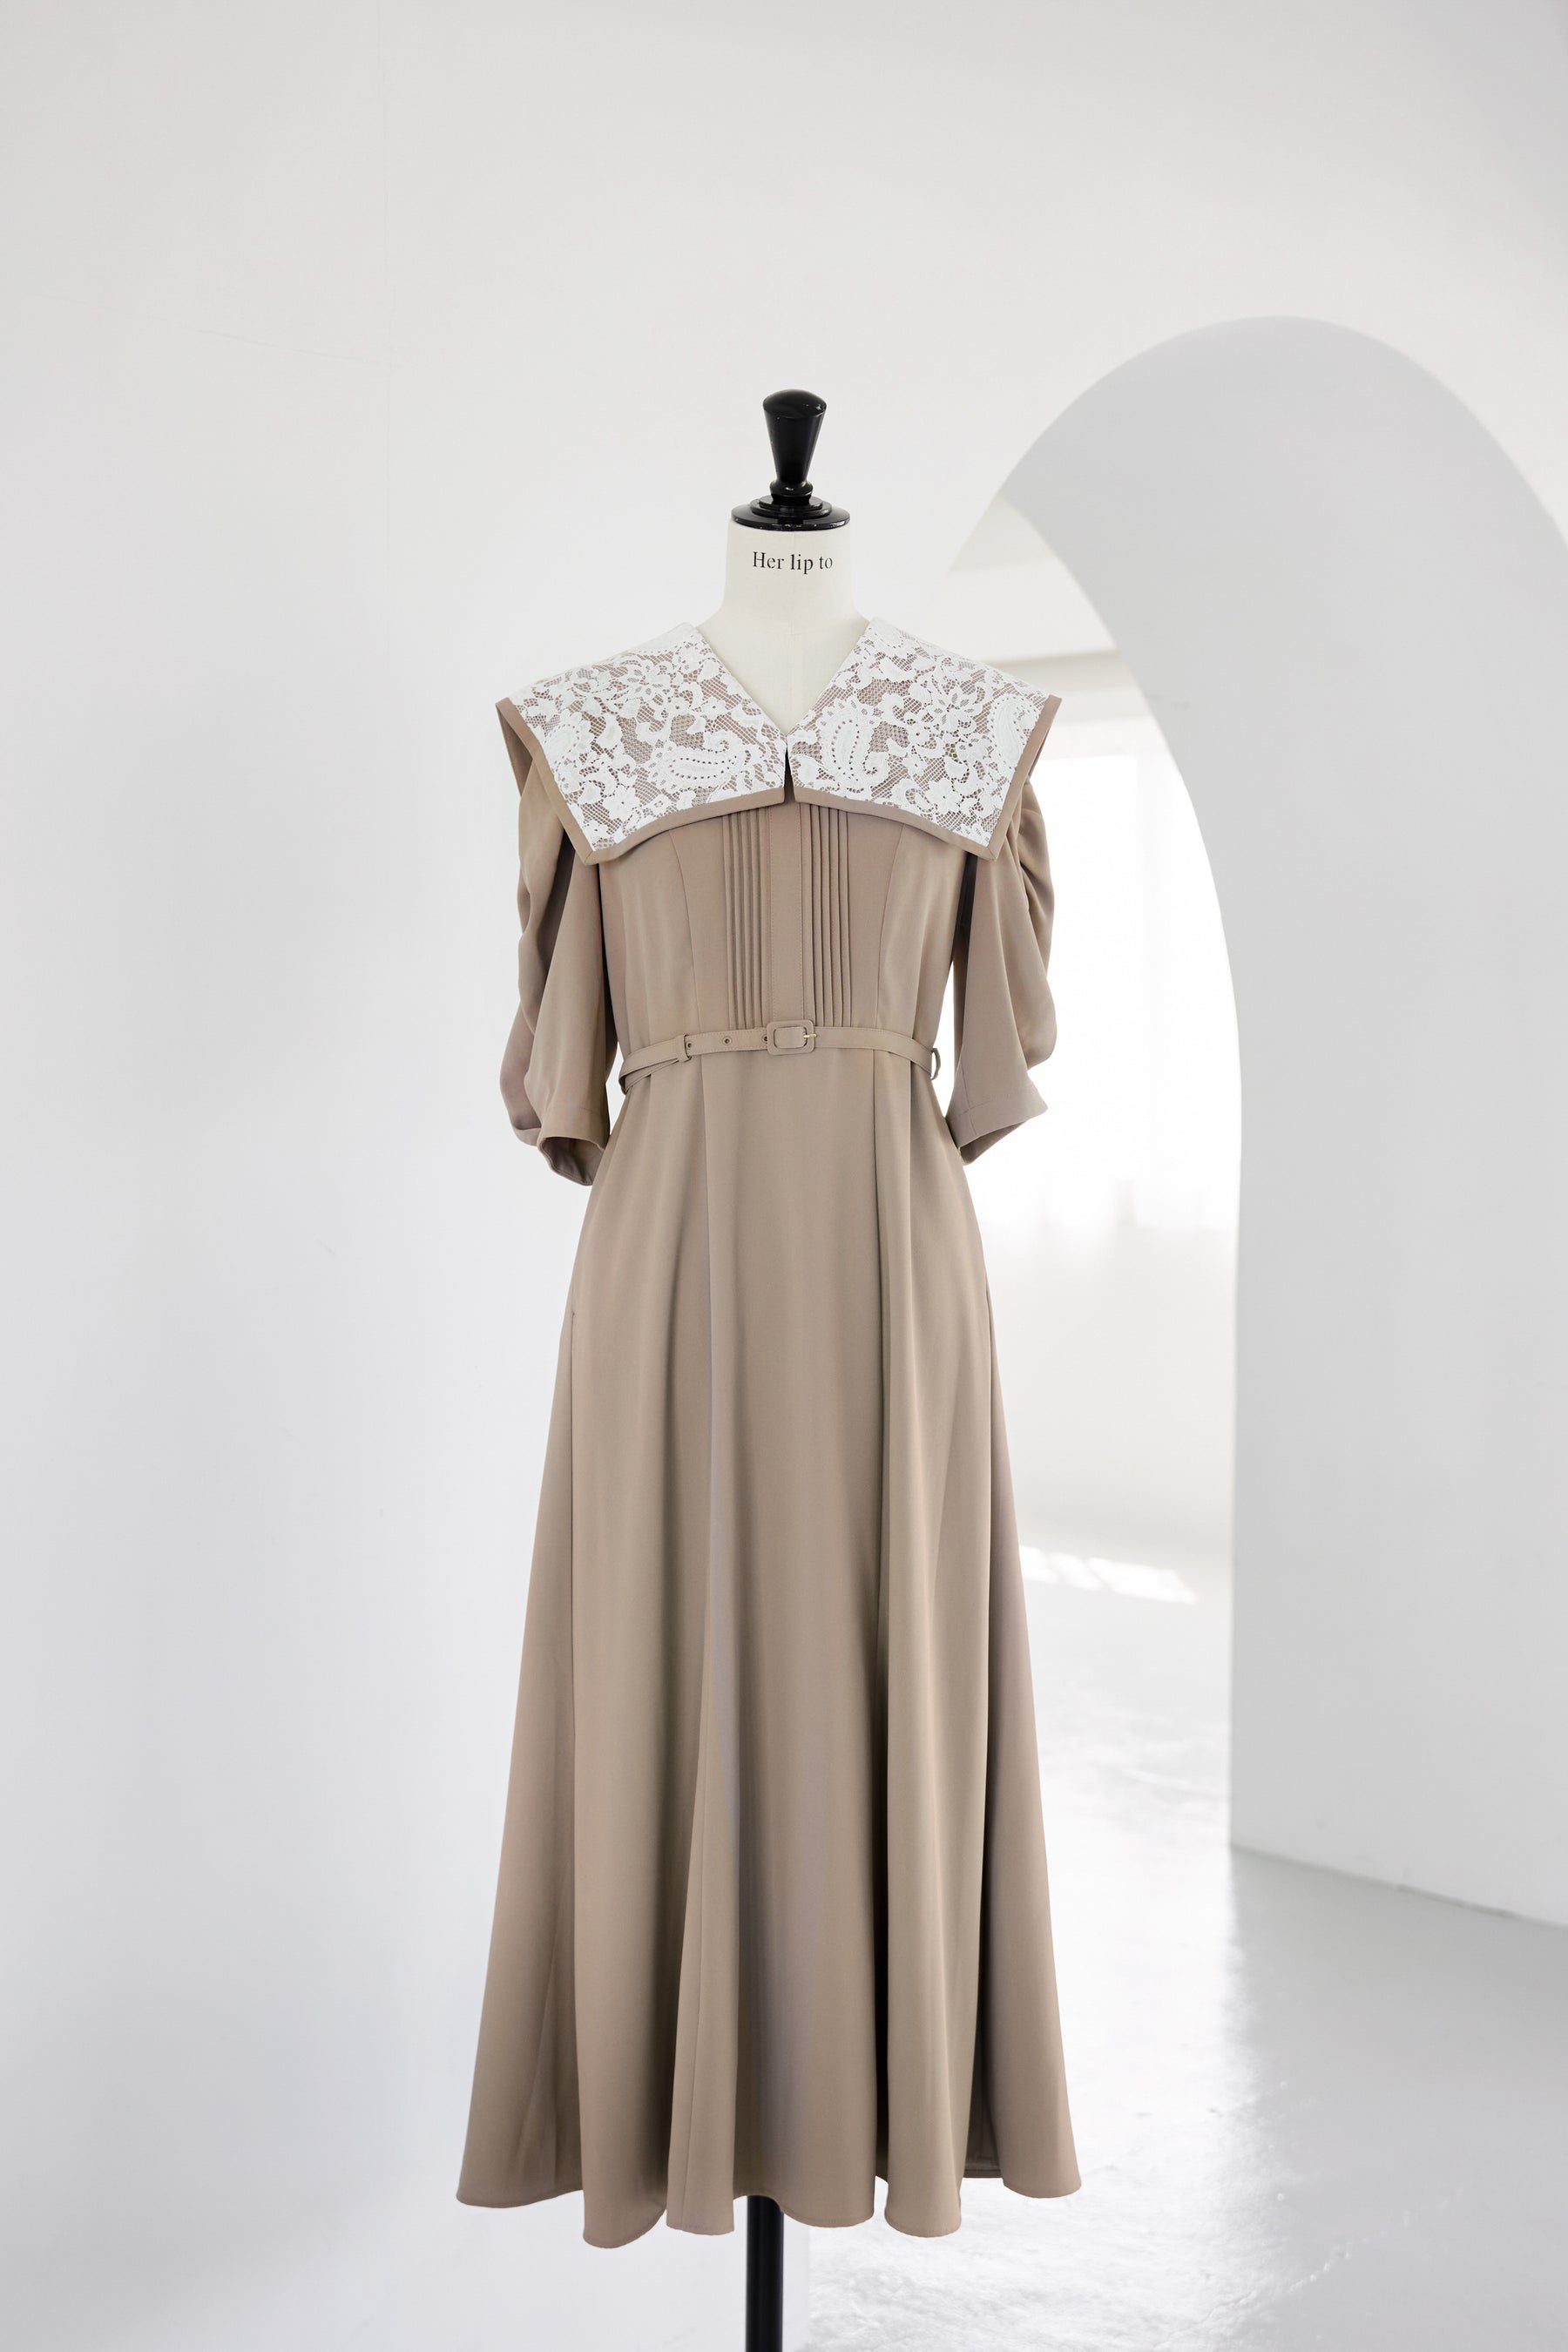 Fubail / Vyronas Lace Collar Dress